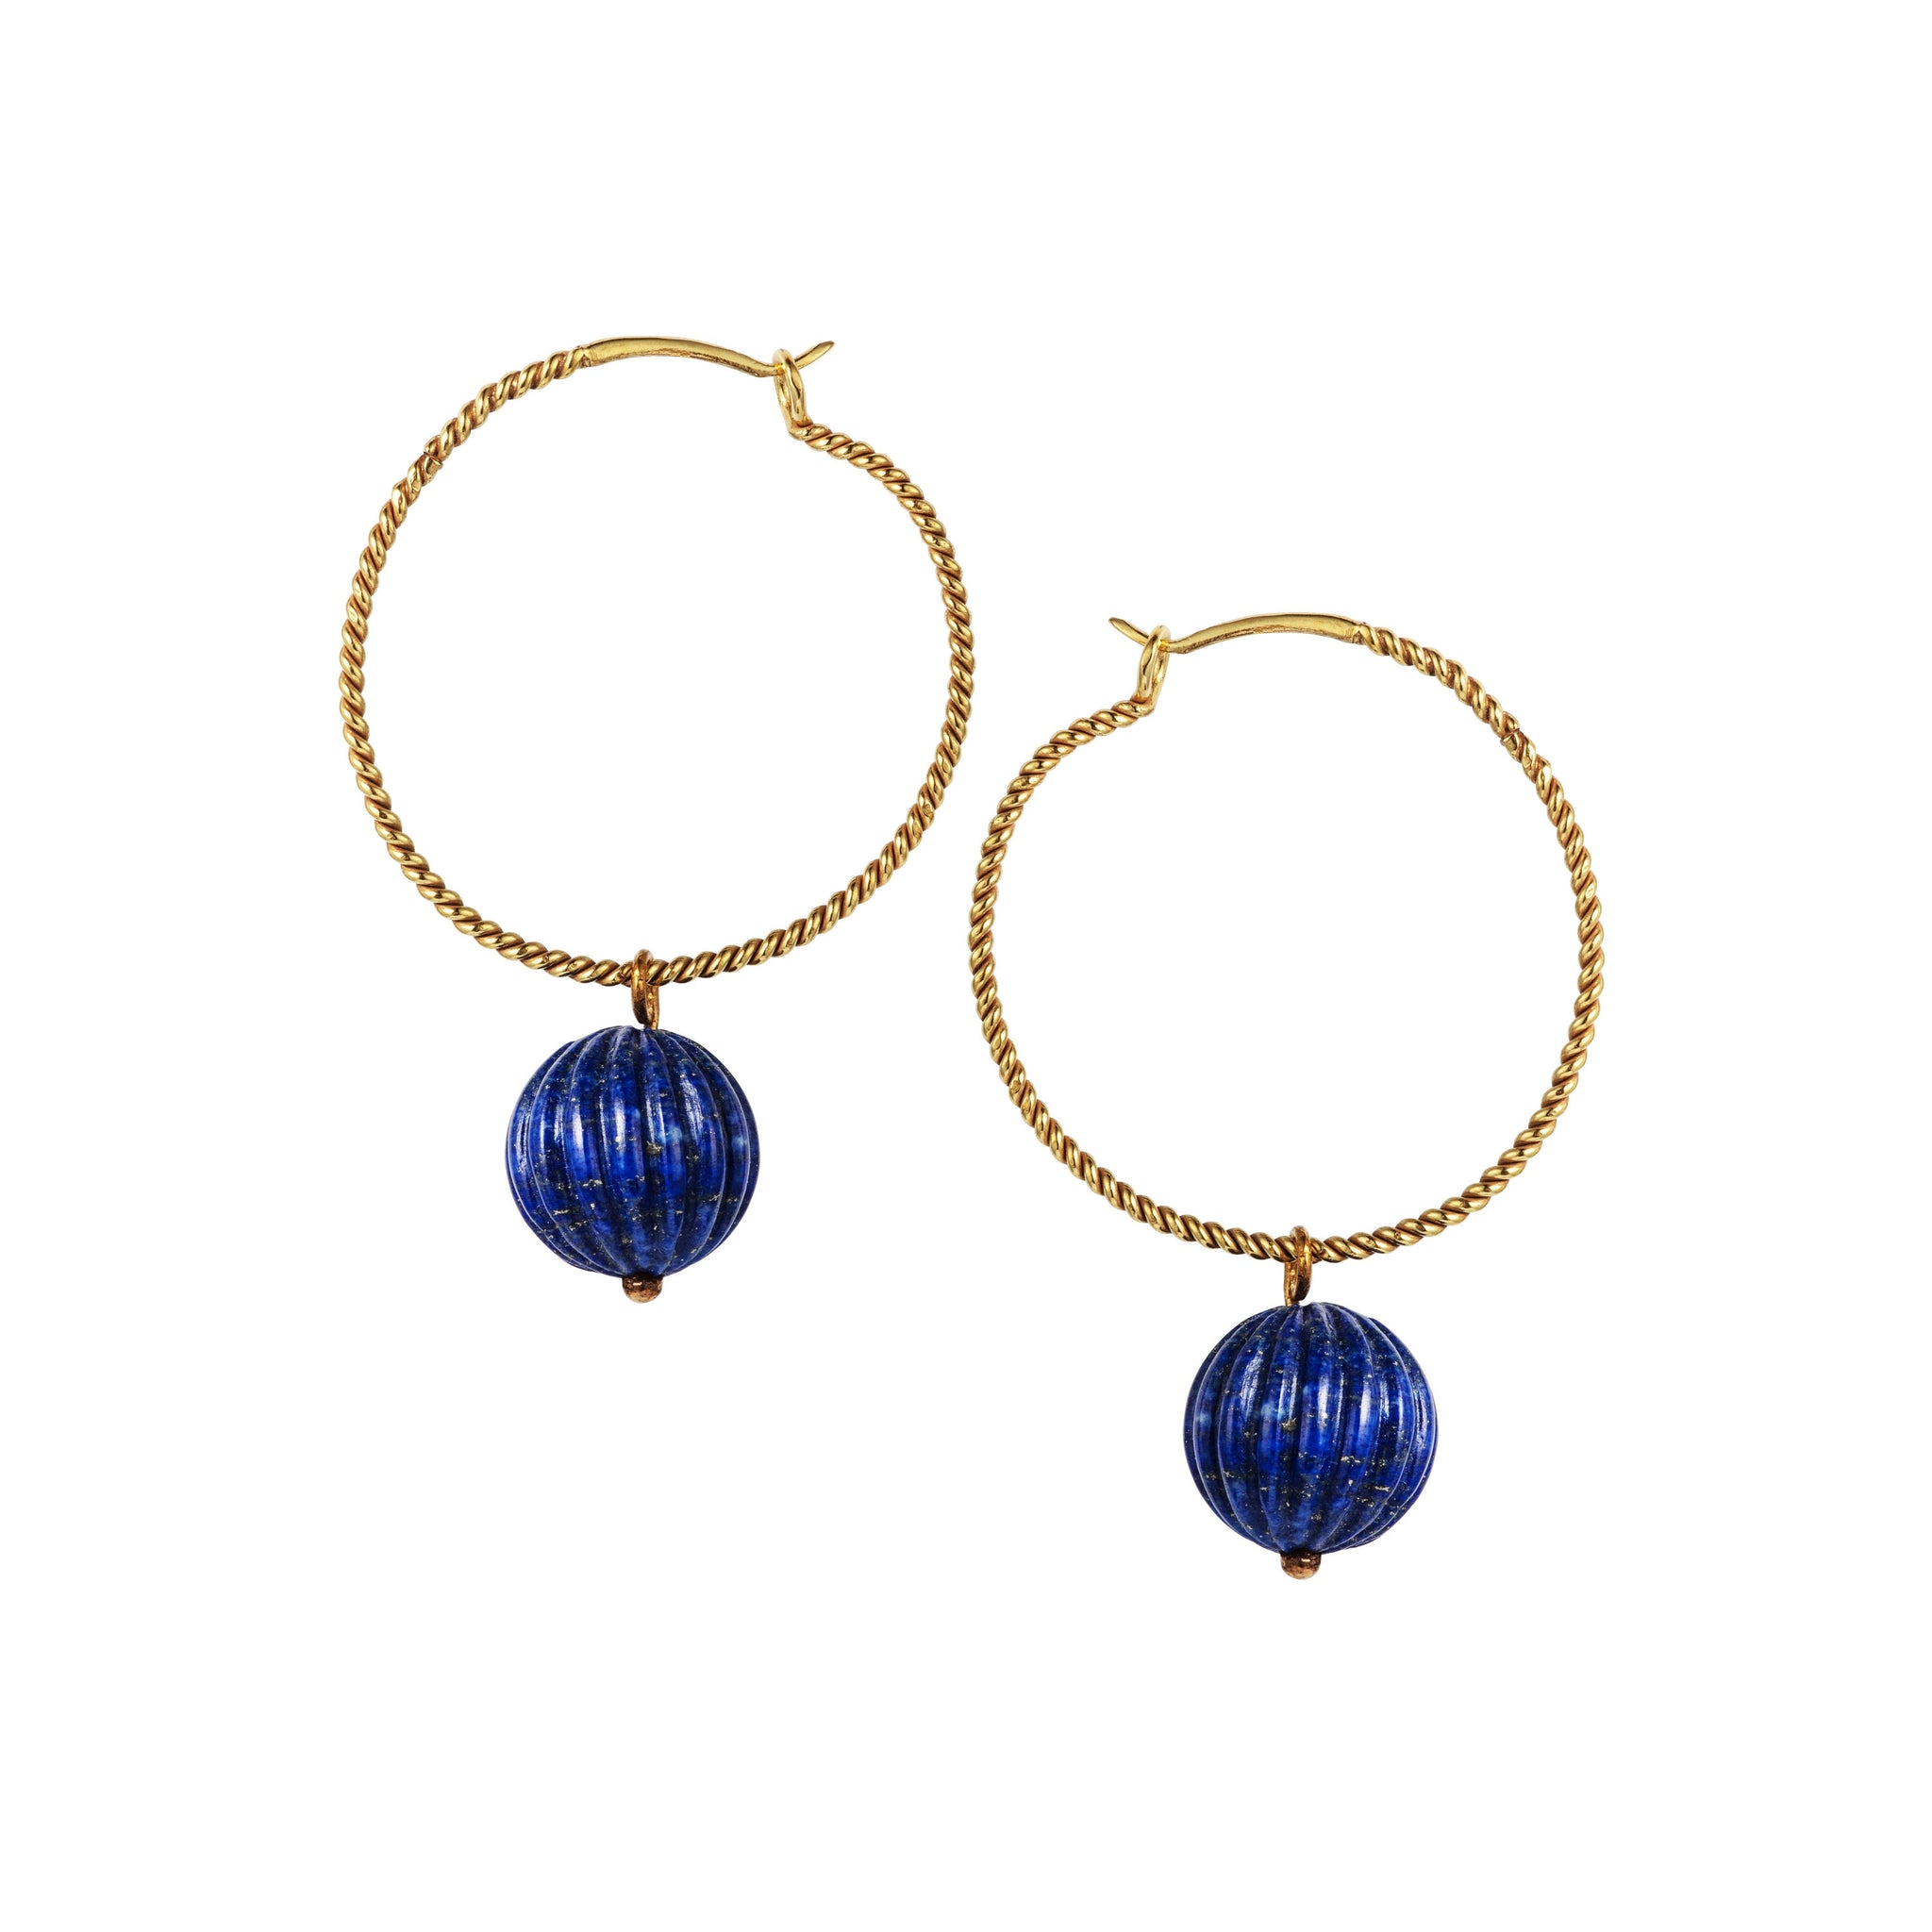 Handmade Afghan Lapis Lazuli Gold Plated Brass Hoop Earrings Elegant Chic Minimalist Inspired Jewelry Blue Artisanal Gift for Her